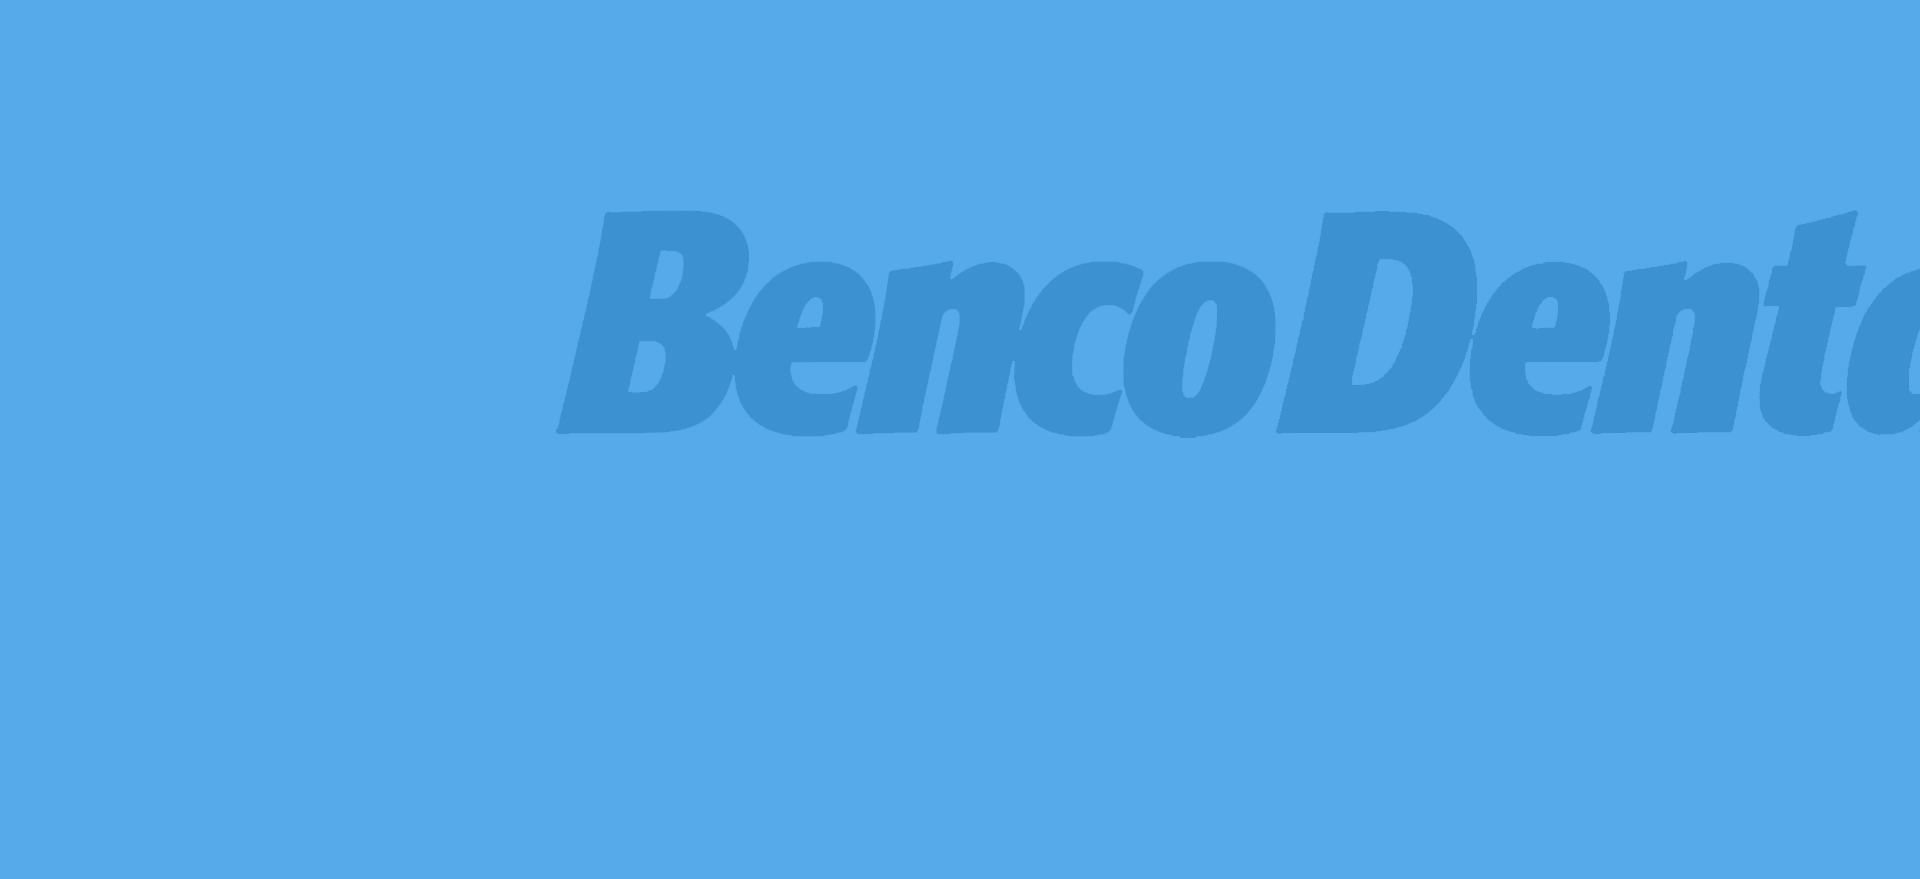 benco-header-graphic-v2